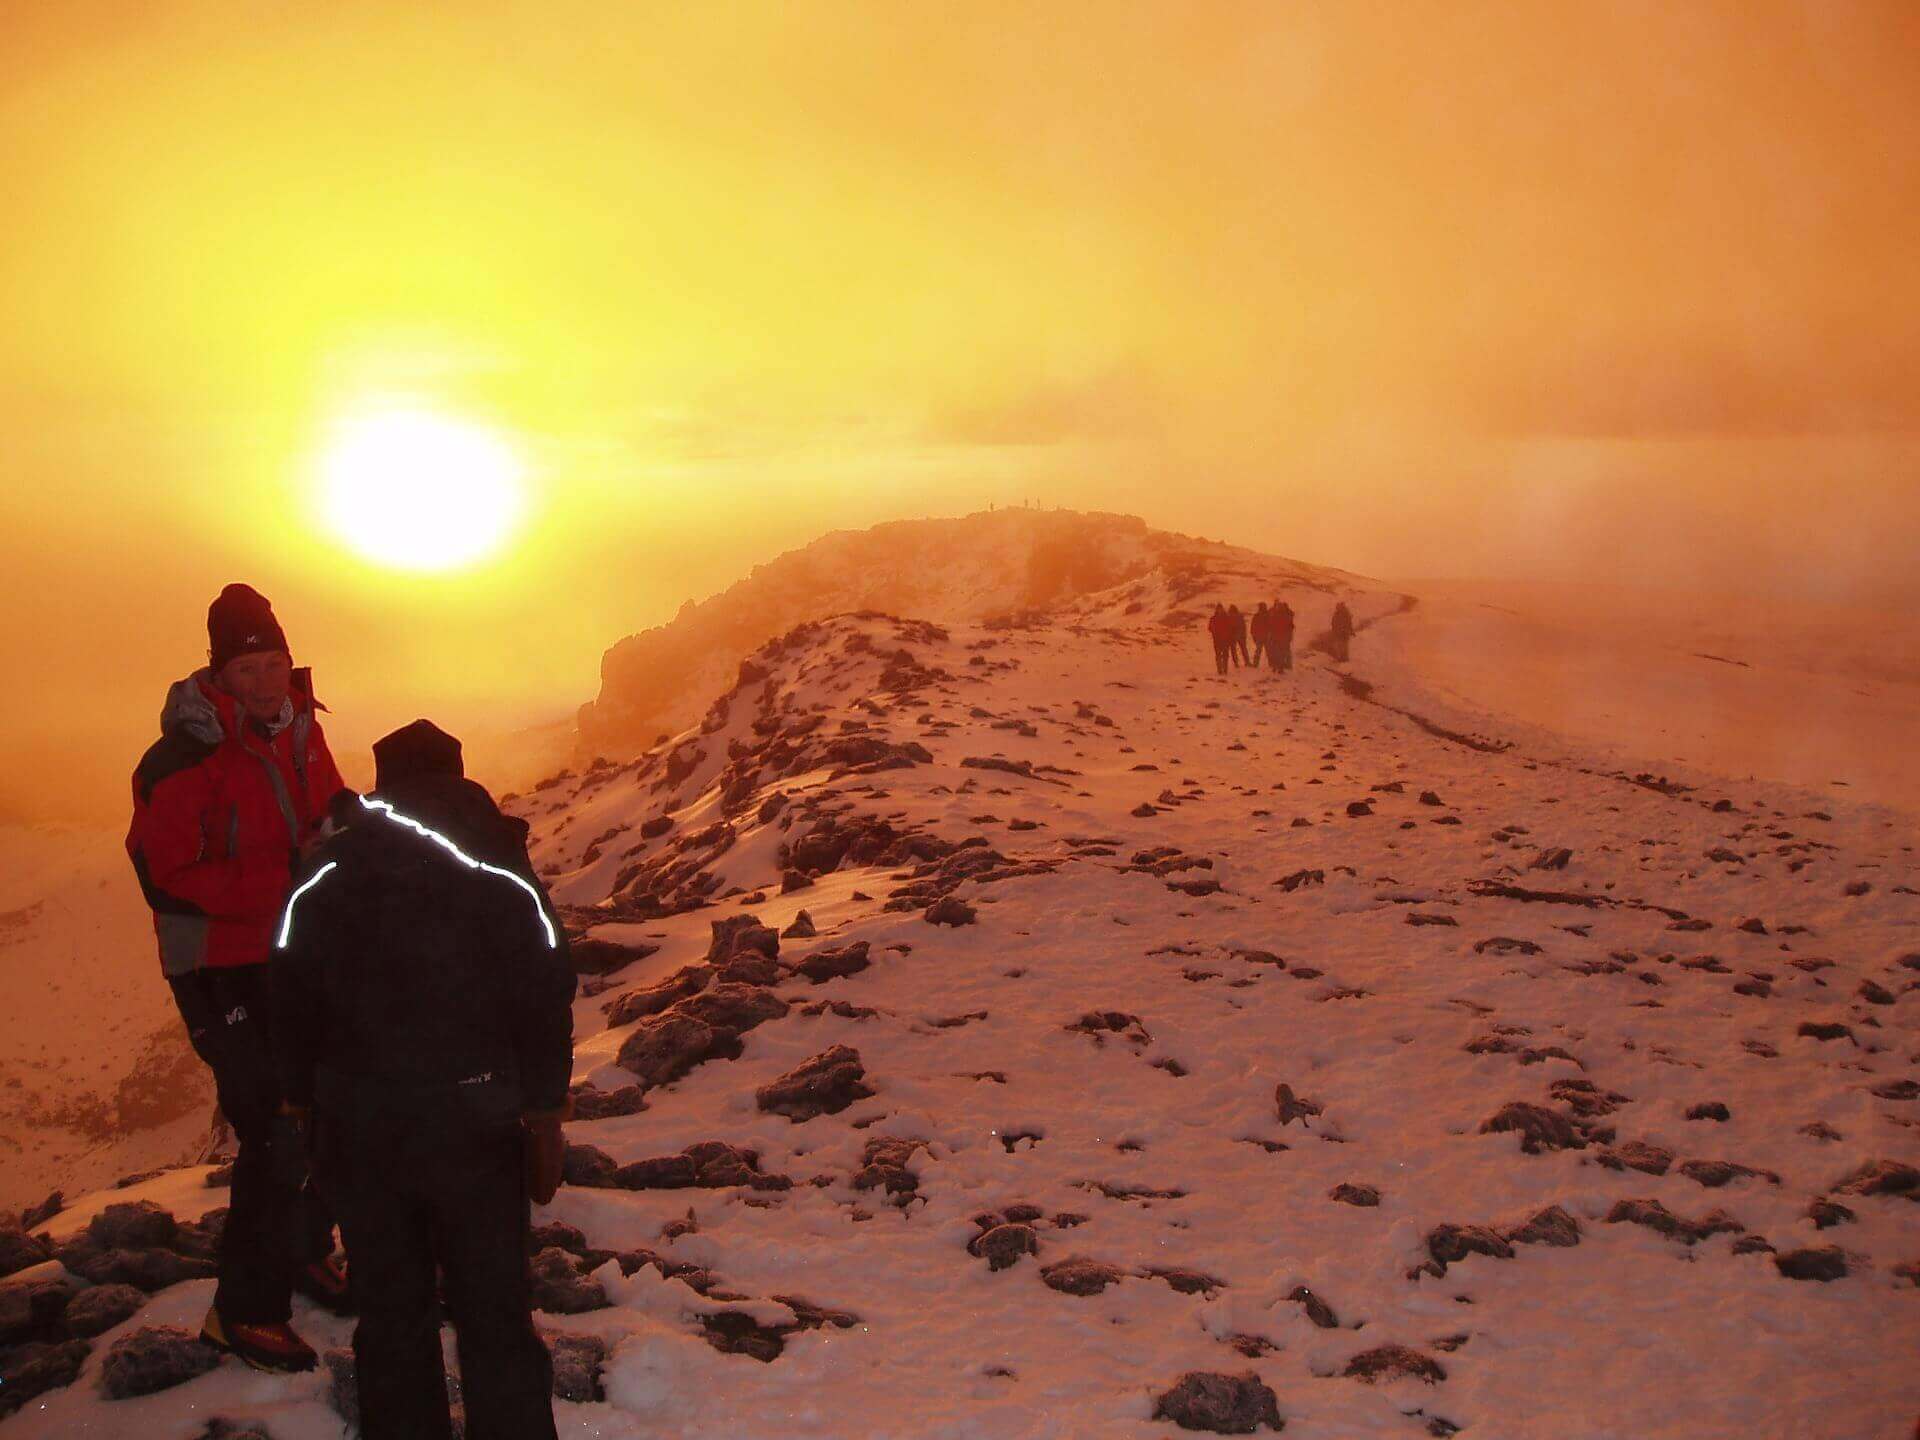 Mount Kilimanjaro trekking to the summit at sunrise